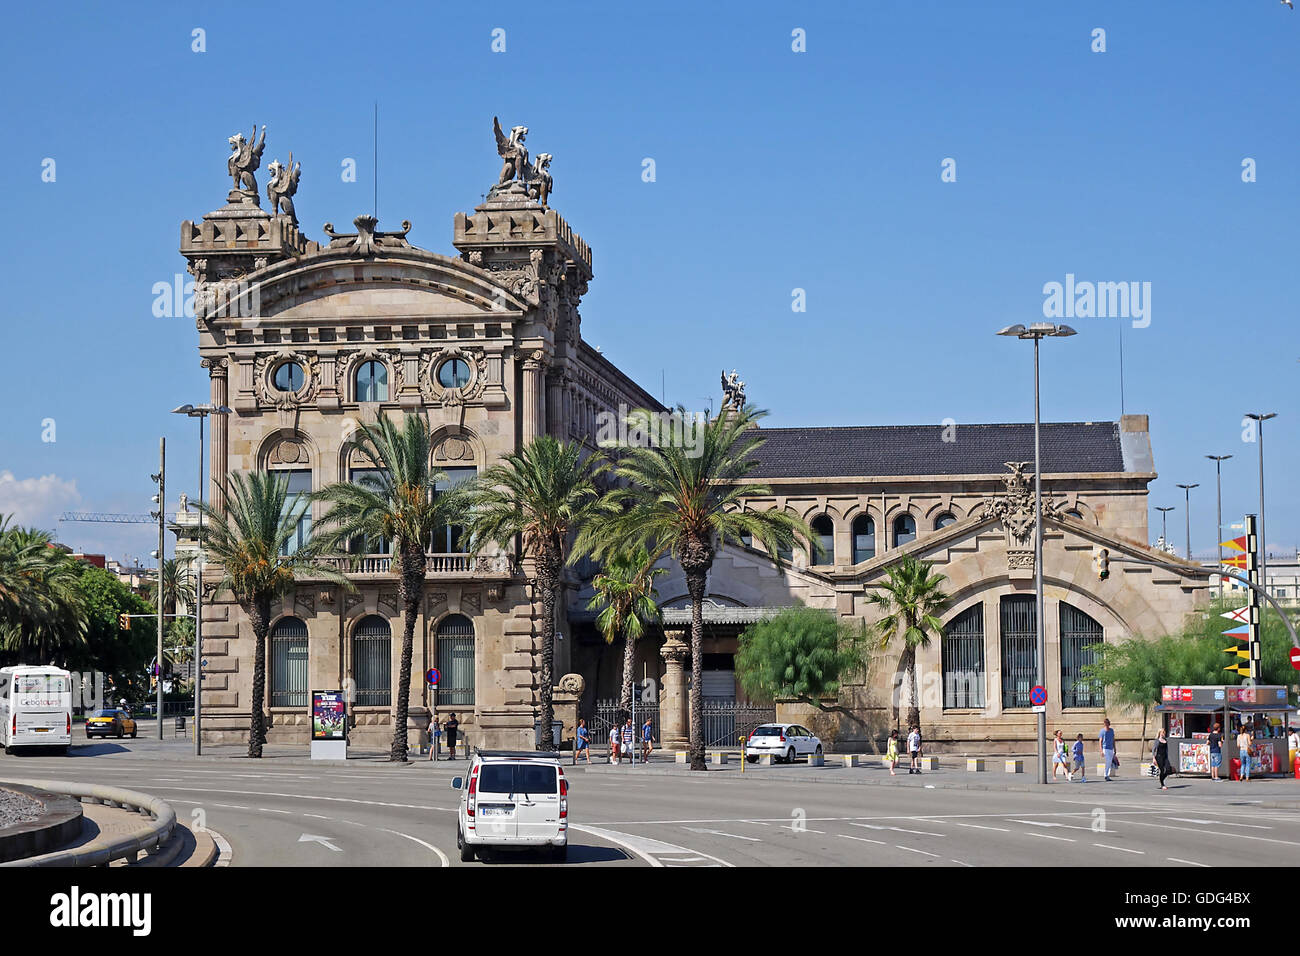 BARCELONA, SPAIN - AUGUST 1, 2015: Edifici de la Duana (Aduana) - the Ancient building of Customs House built in 1902 Stock Photo